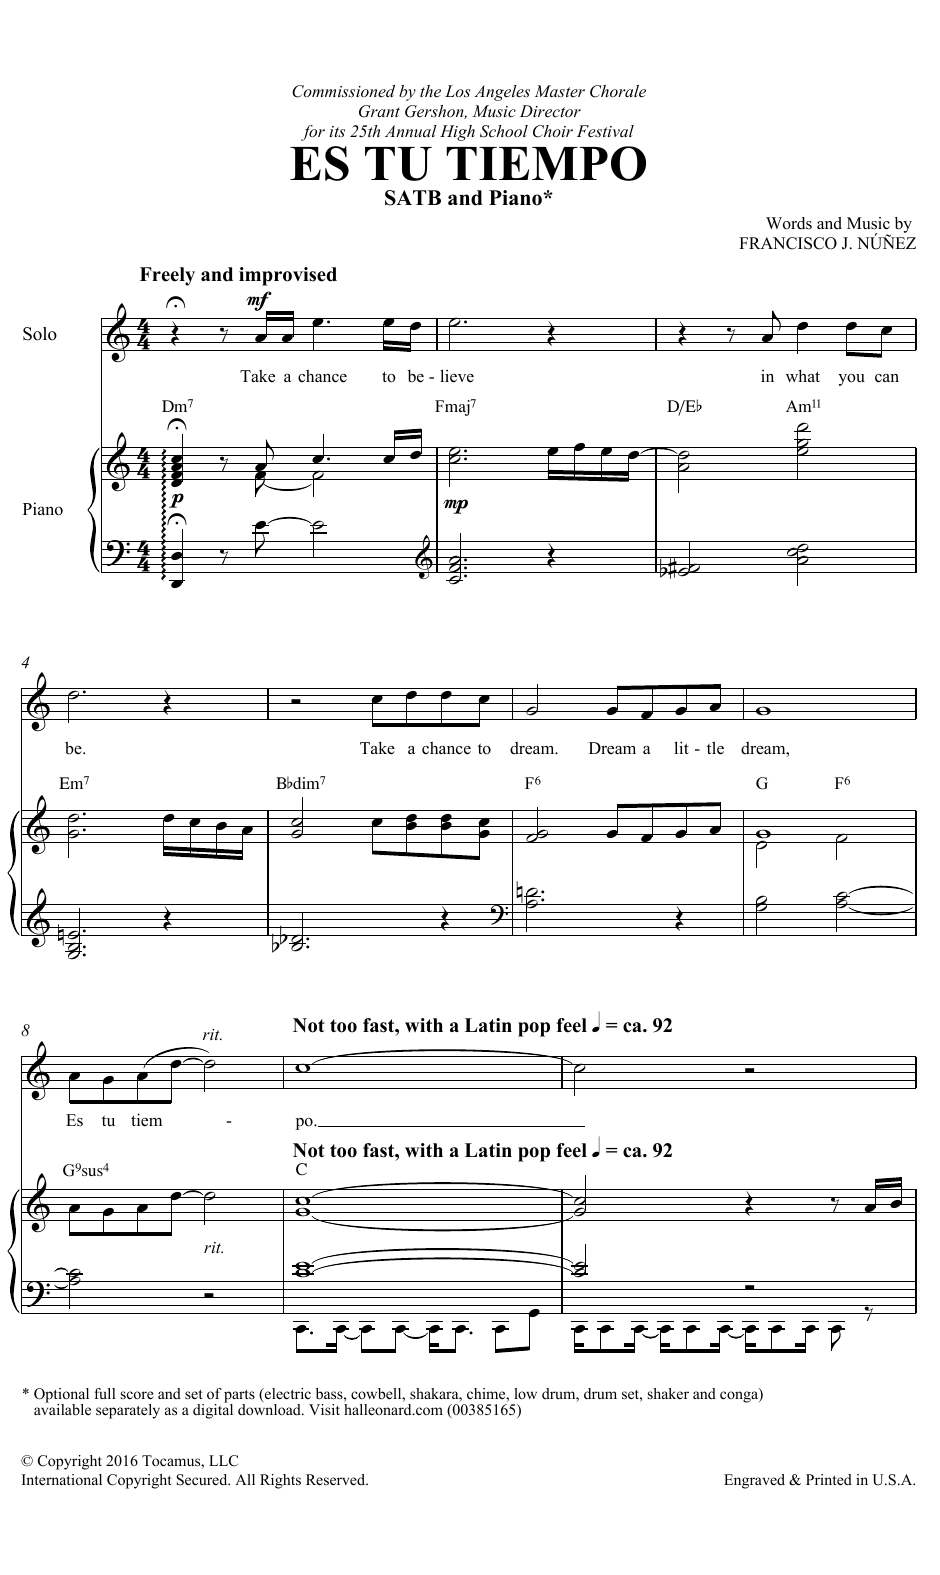 Francisco J. Núñez Es Tu Tiempo Sheet Music Notes & Chords for SATB Choir - Download or Print PDF